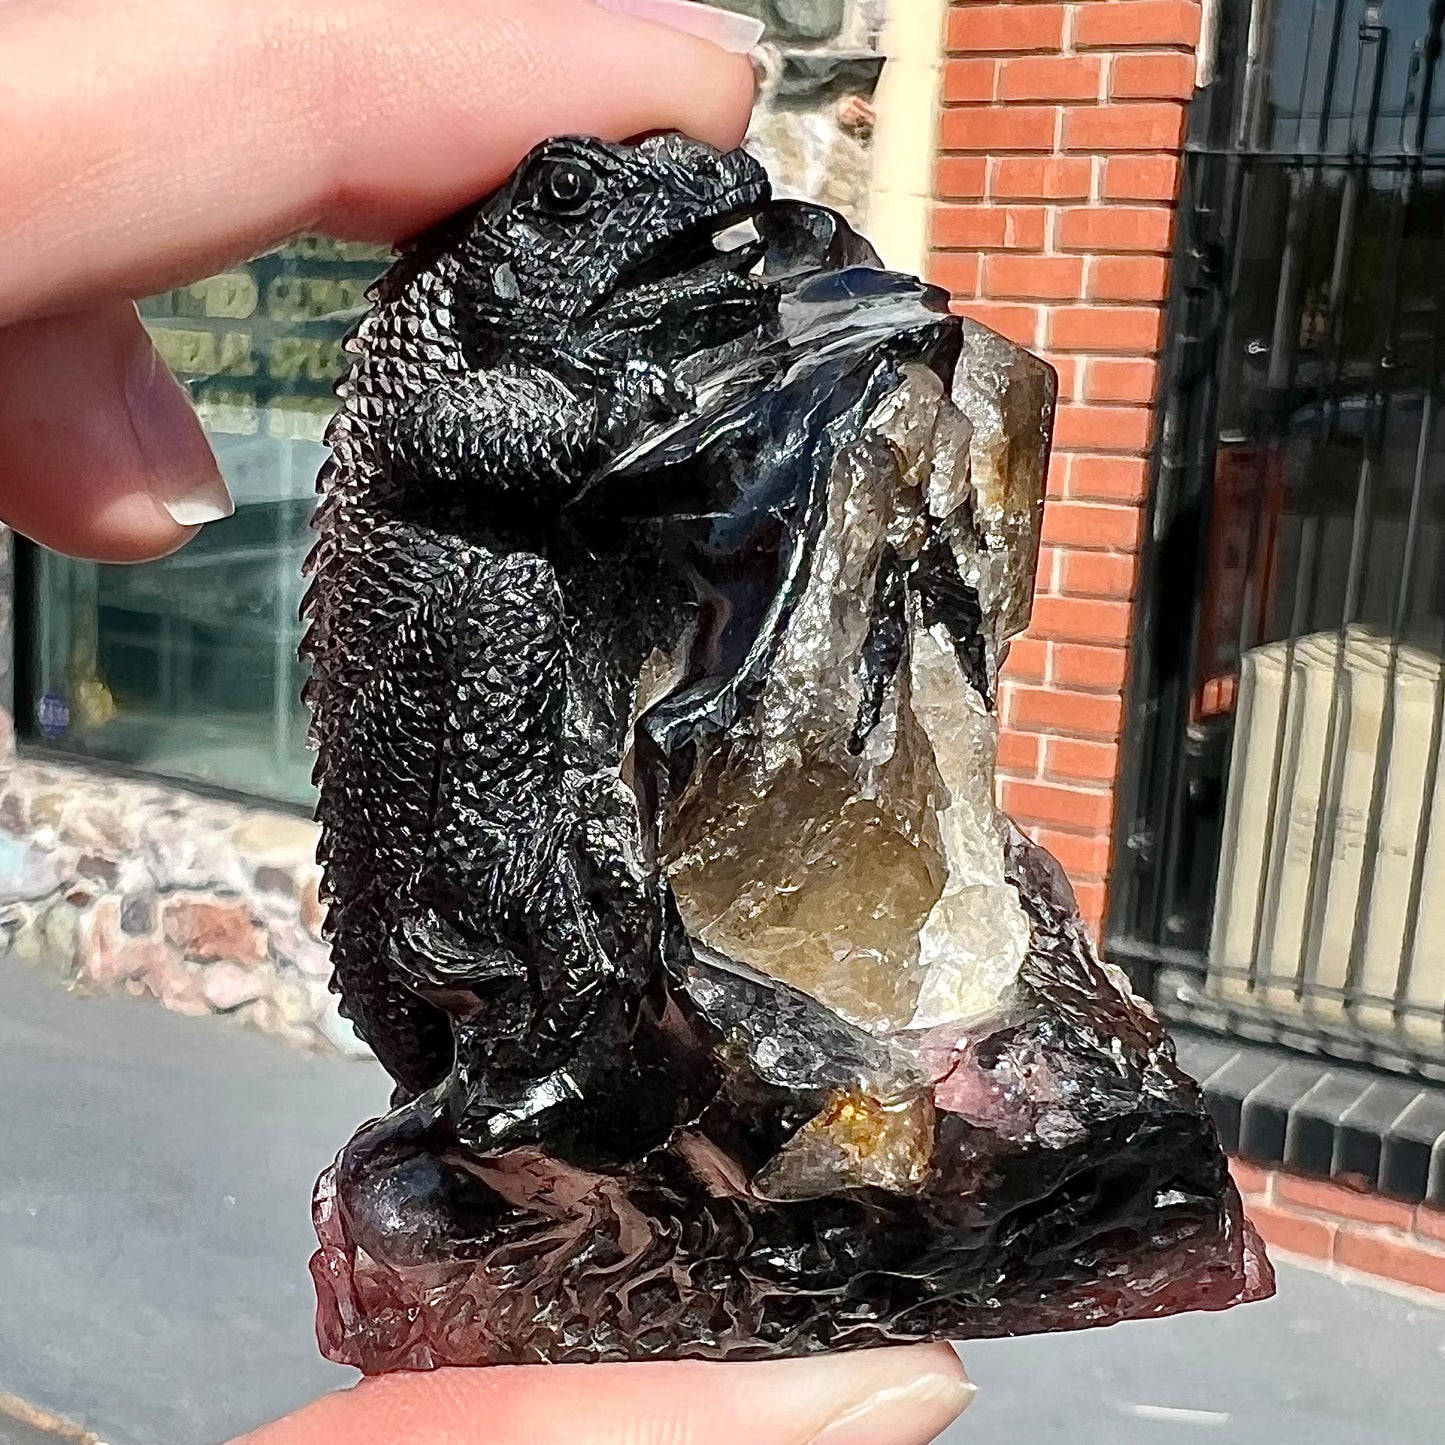 A stone lizard carved by artist, Ronald Stevens, from a liddicoatite tourmaline crystal.